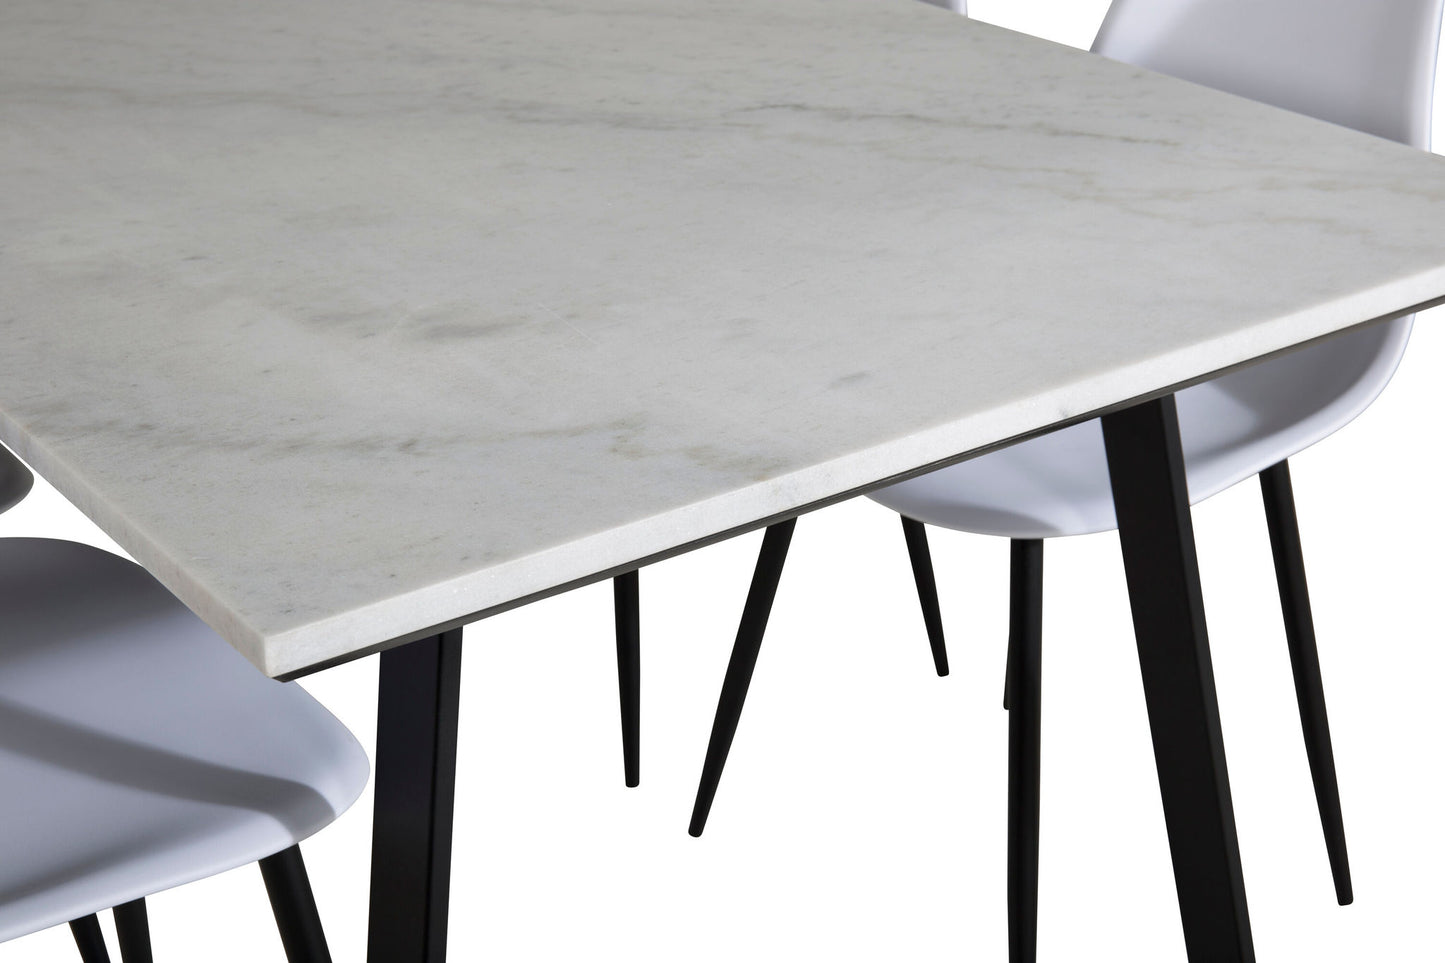 Estelle - Spisebord, 140*90 - Hvid / Sort+ Polar Plast Spisebordsstol - Sorte ben / Hvid Plast